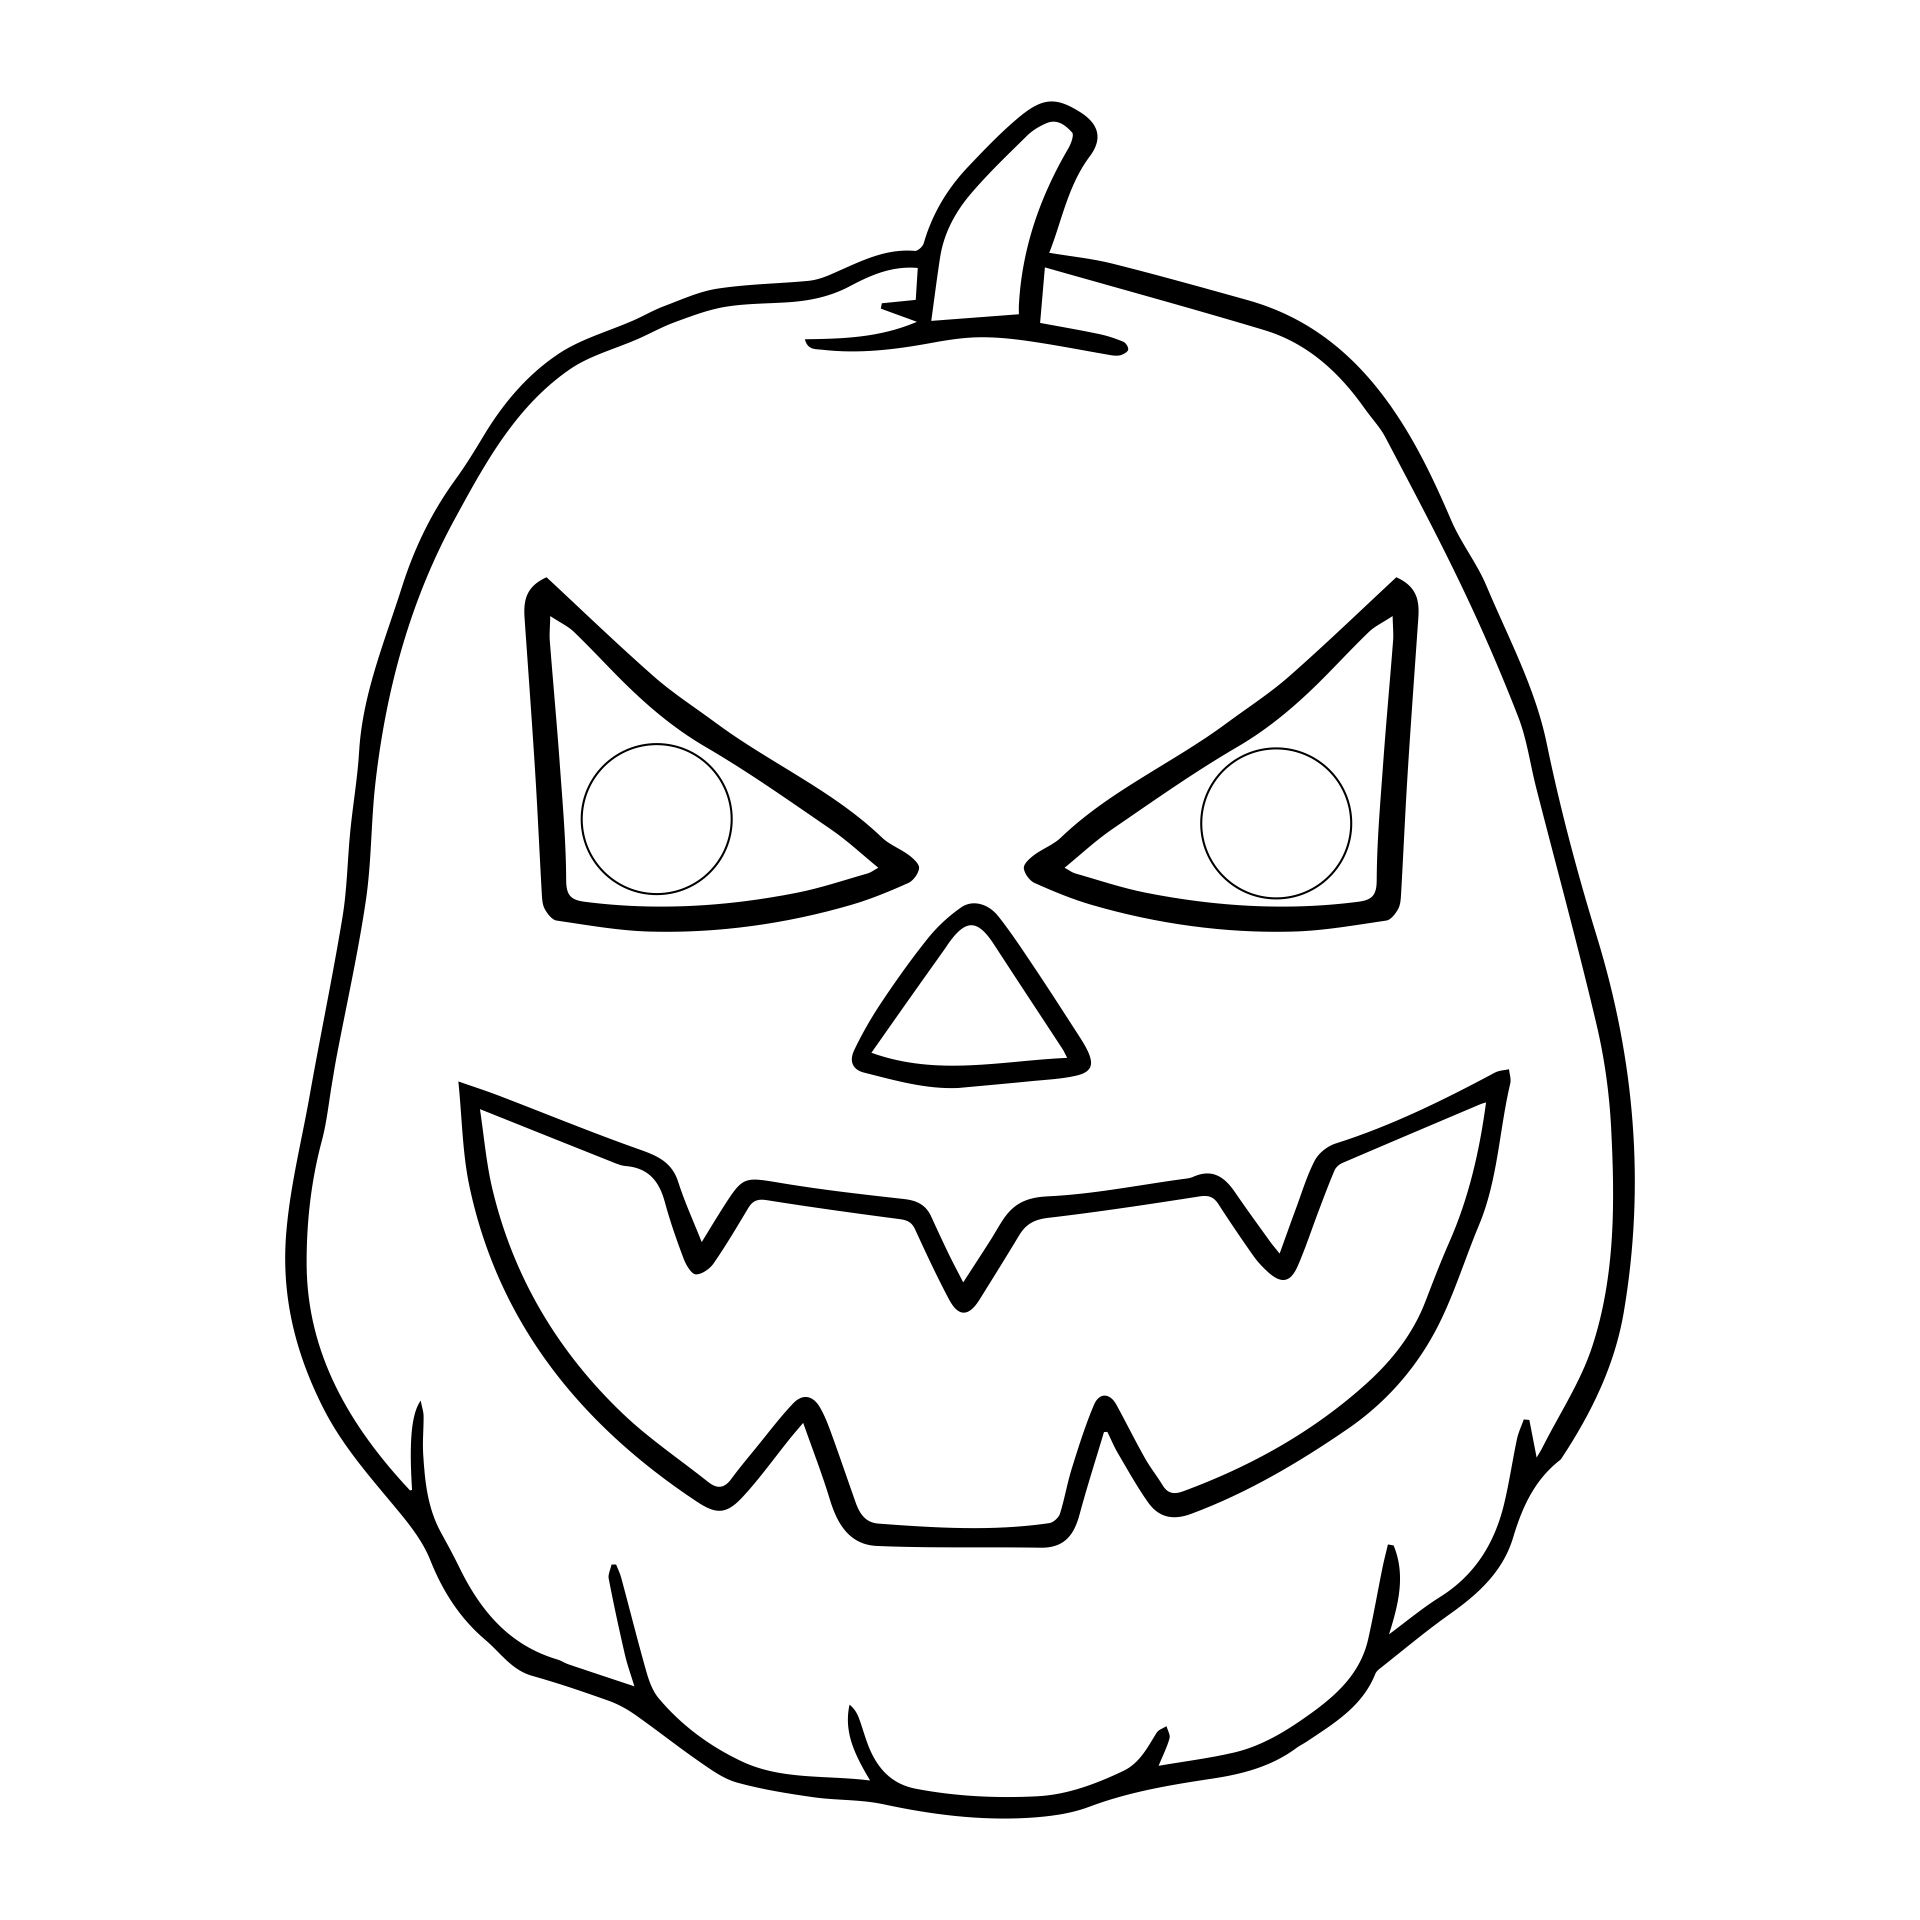 Halloween Mask Coloring Pages - 15 Free PDF Printables | Printablee